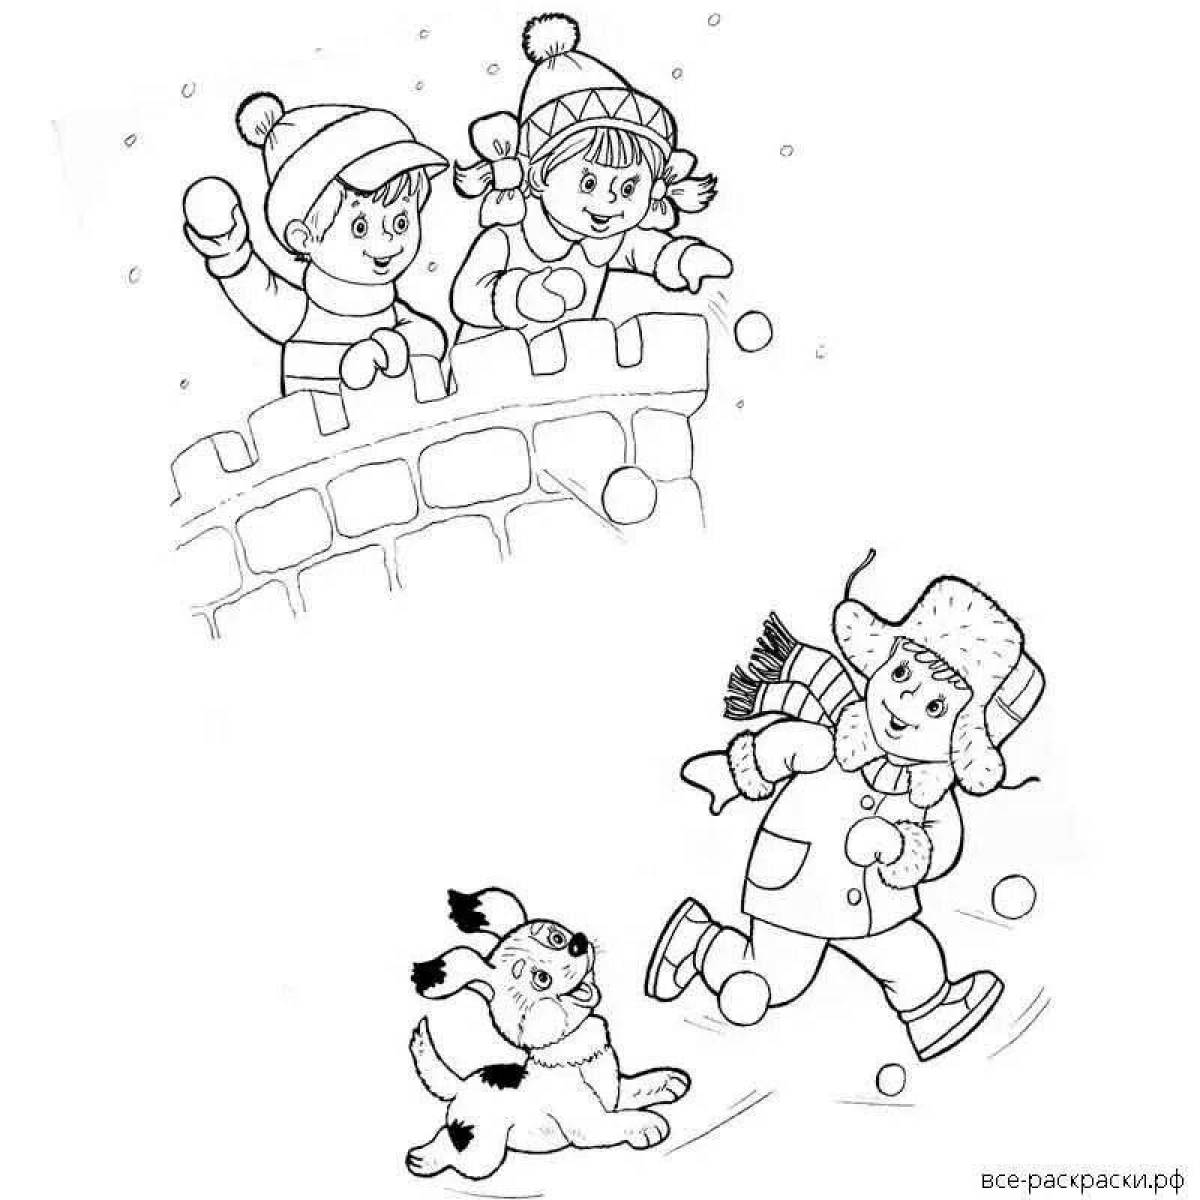 Children playing snowballs #3